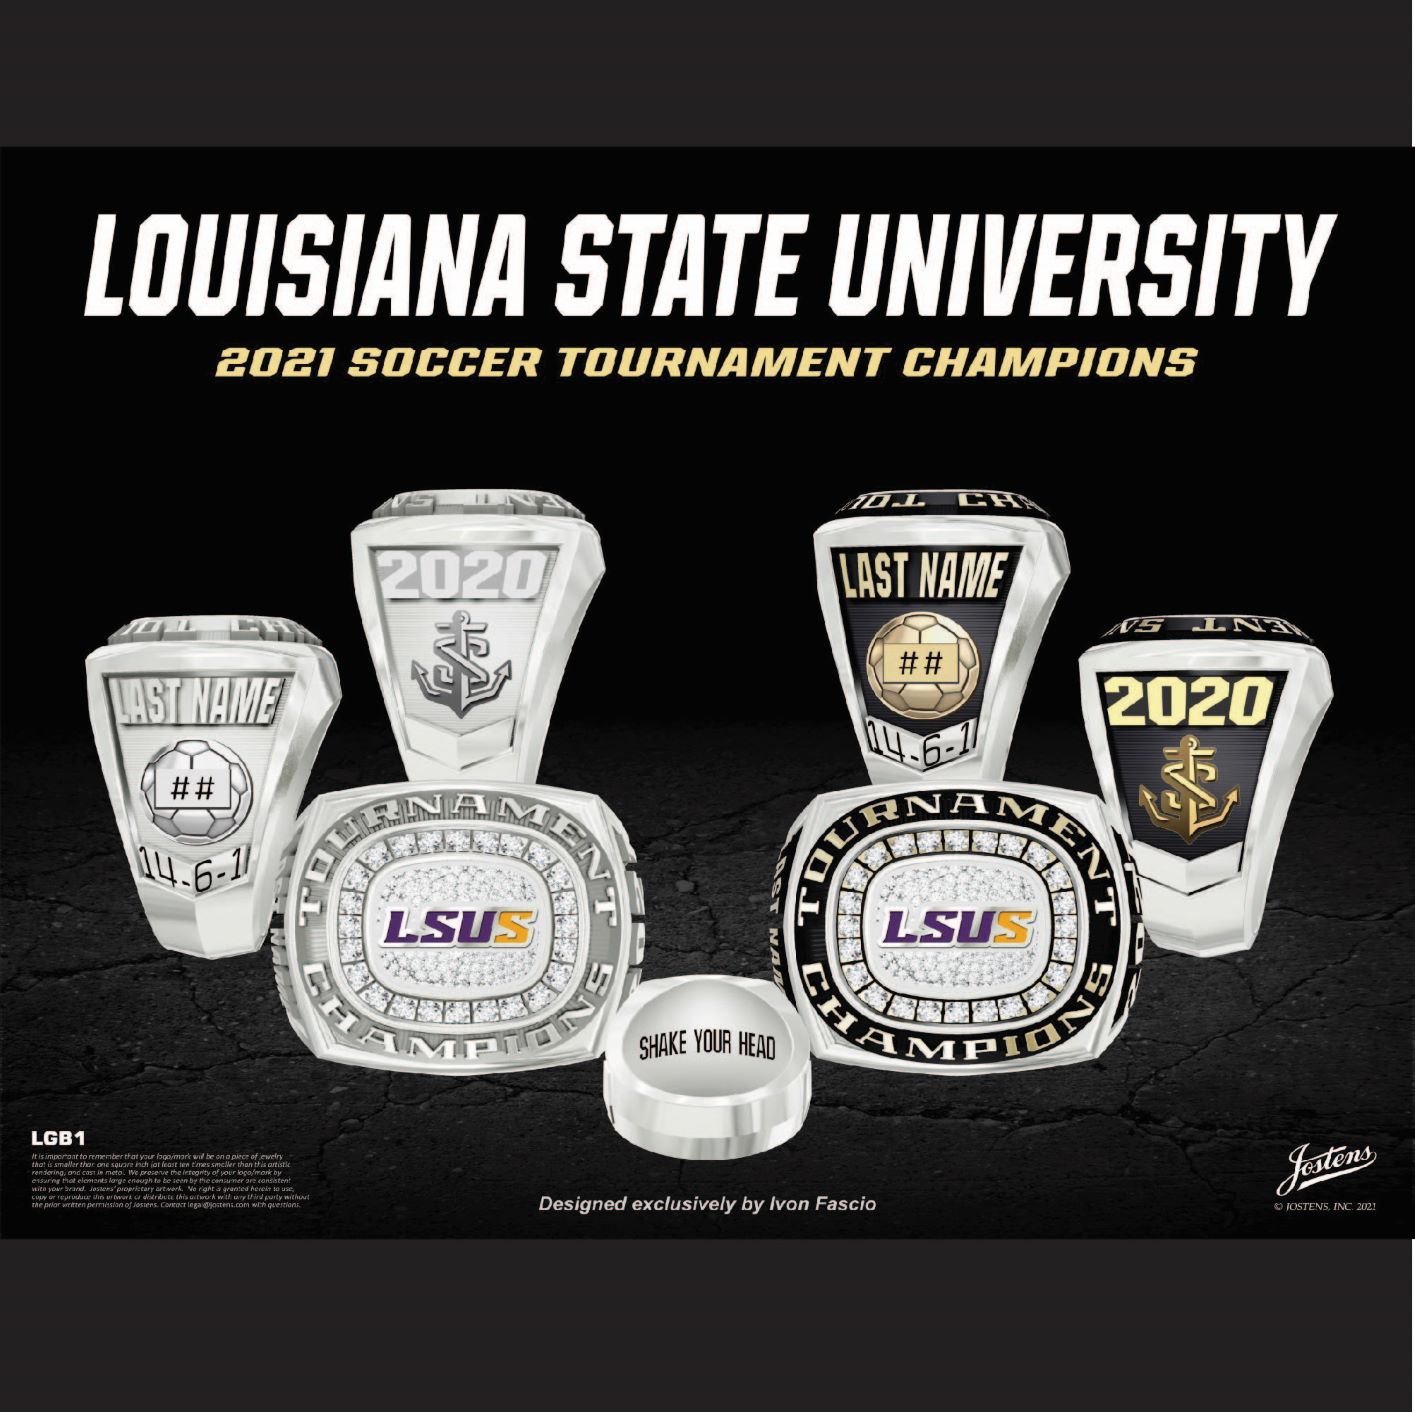 Louisiana State University Women's Soccer 2020 Tournament Championship Ring